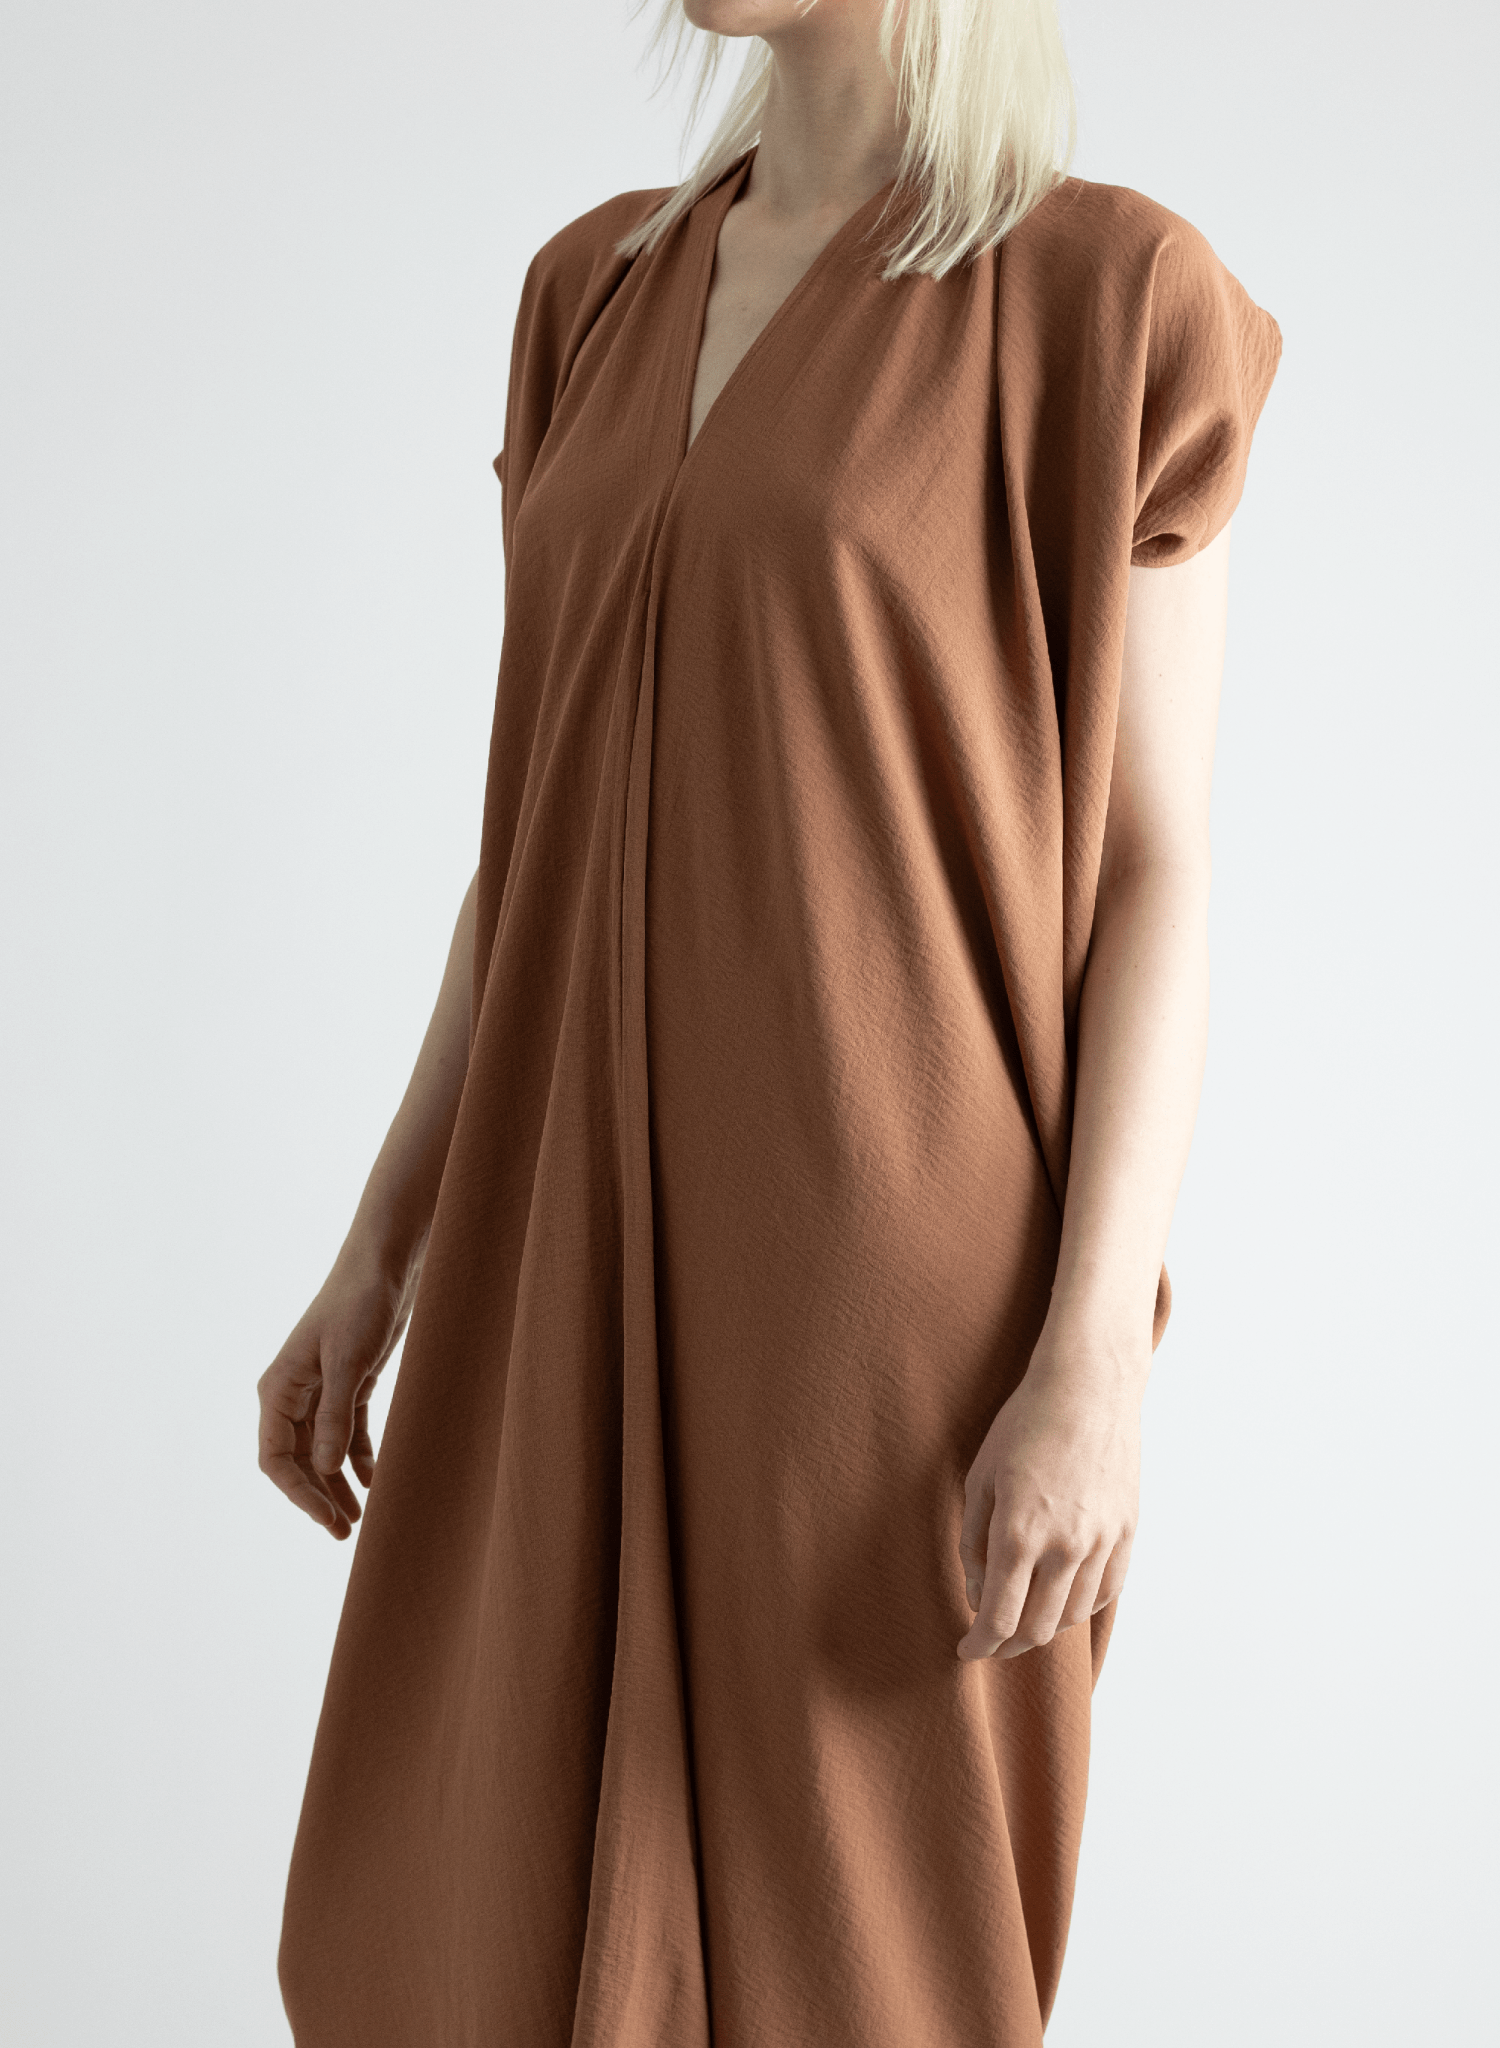 Abstraction Dress - Latte - Meg Canada